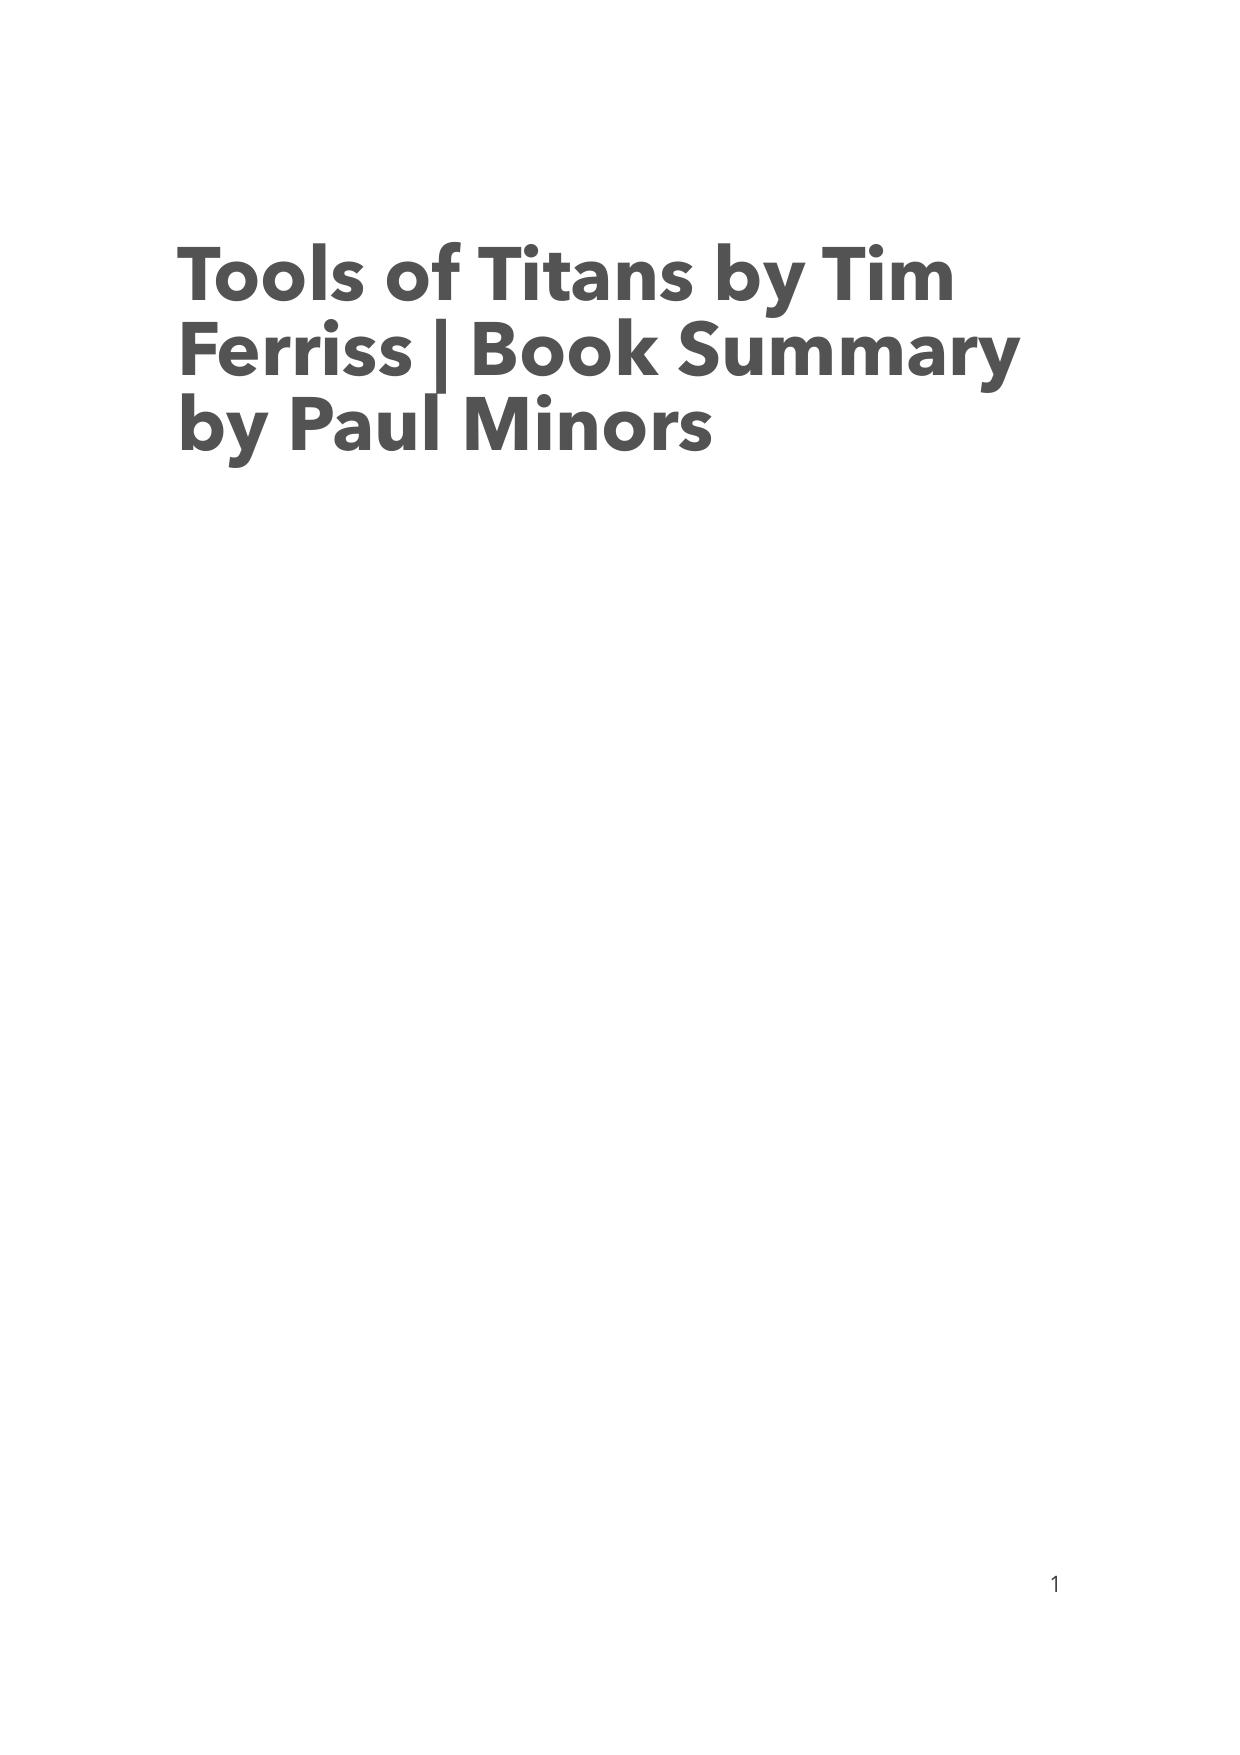 Tools of Titans (Tim Ferriss) Book Summary